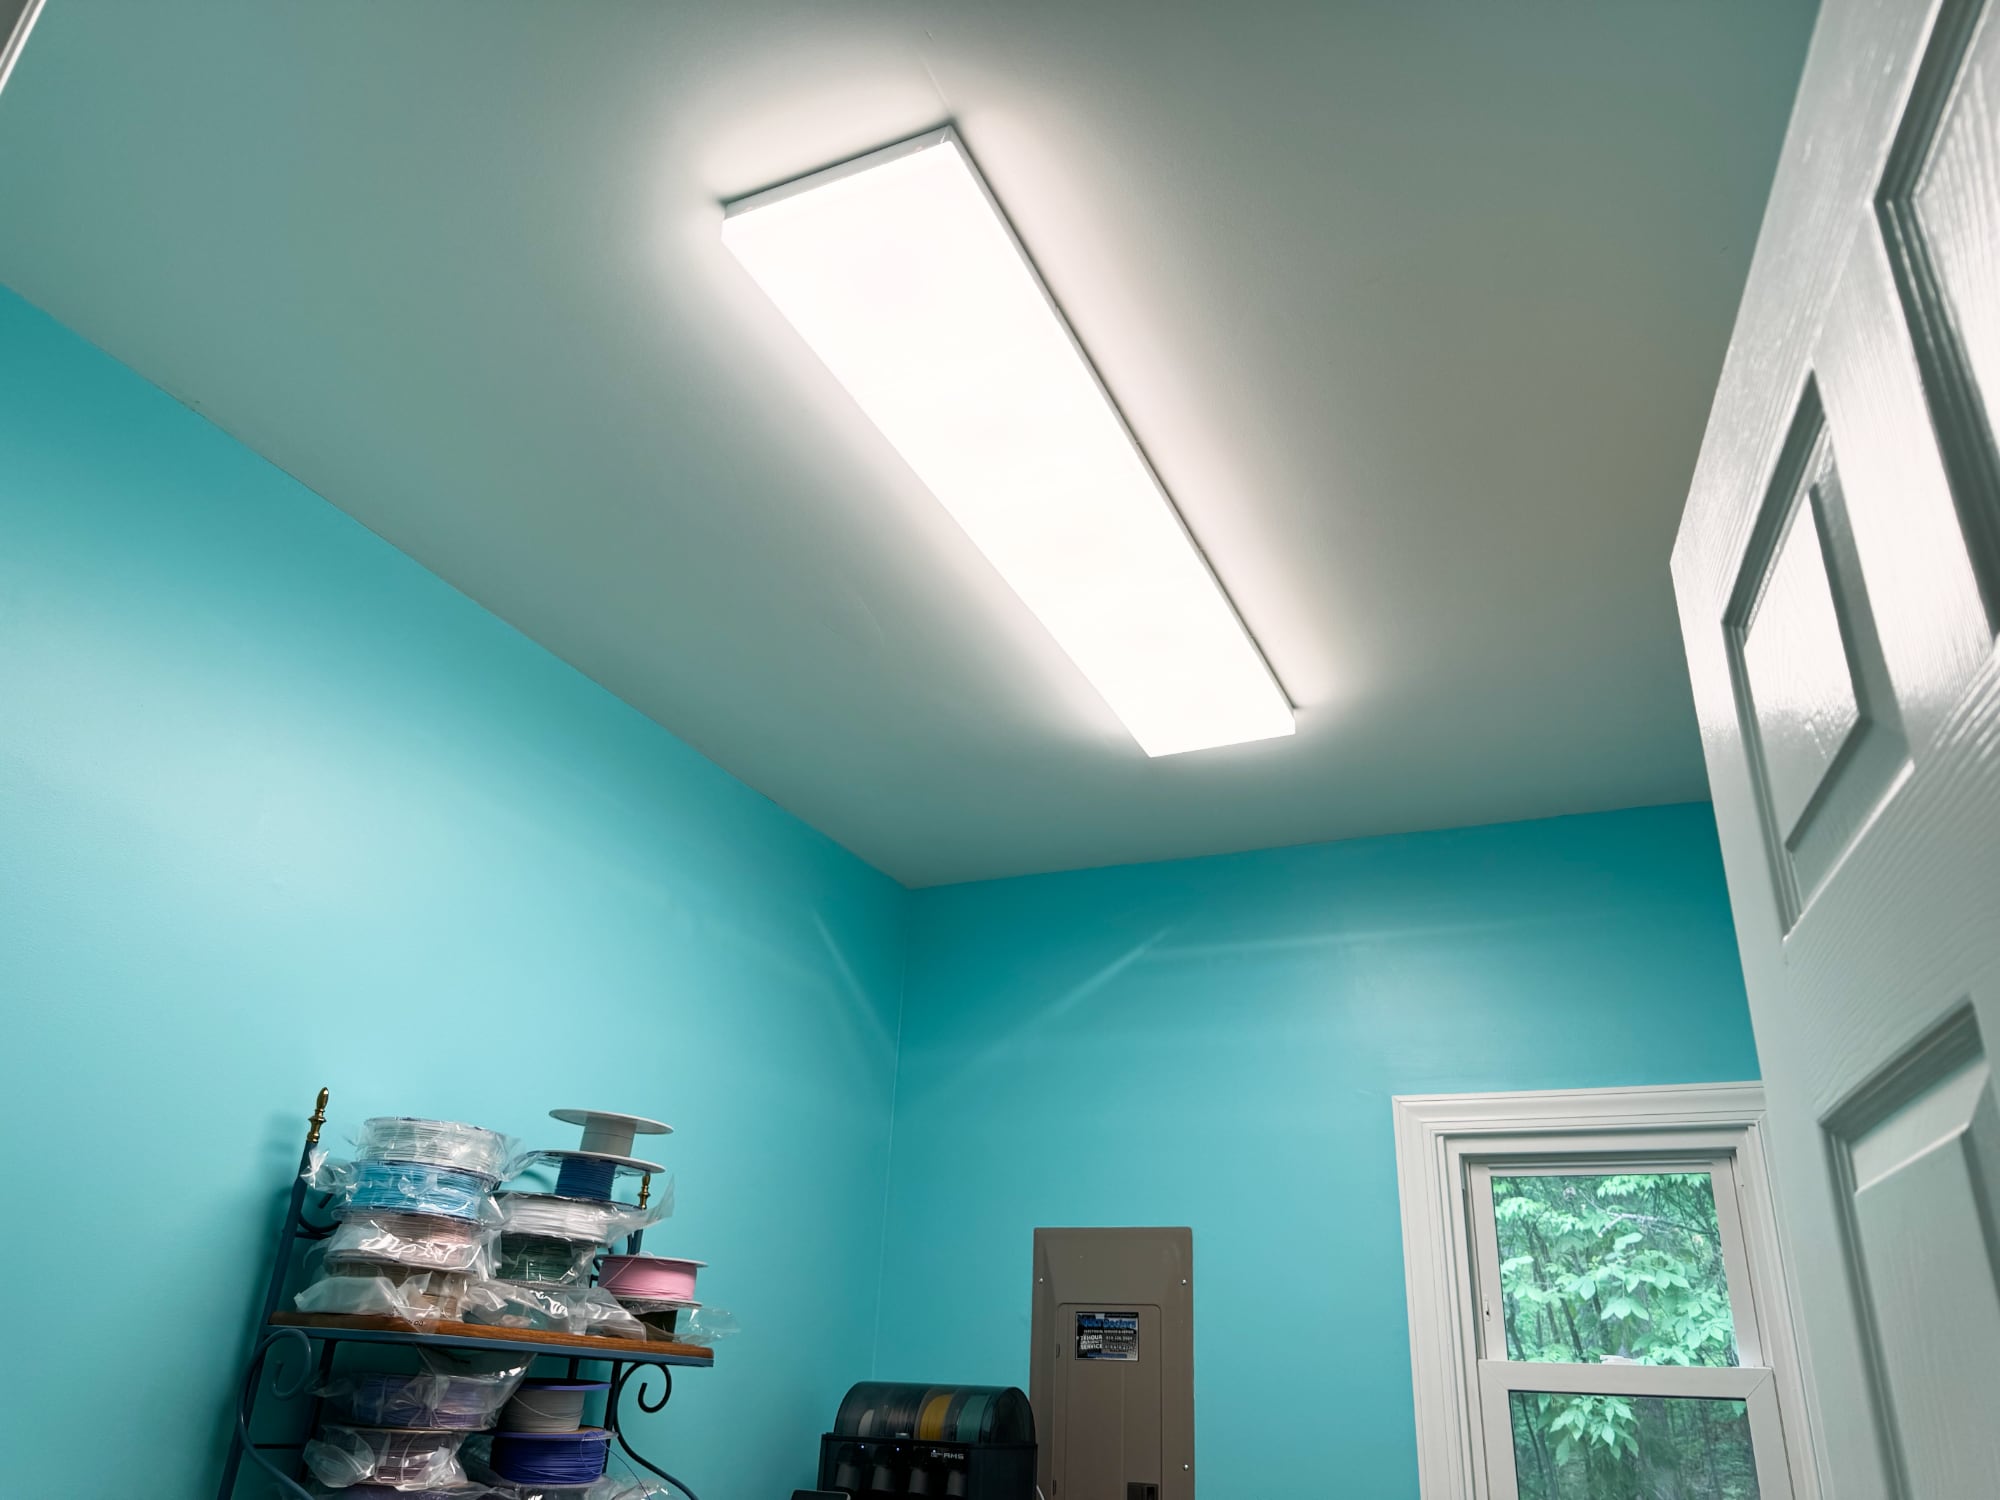 nanoleaf skylight bright